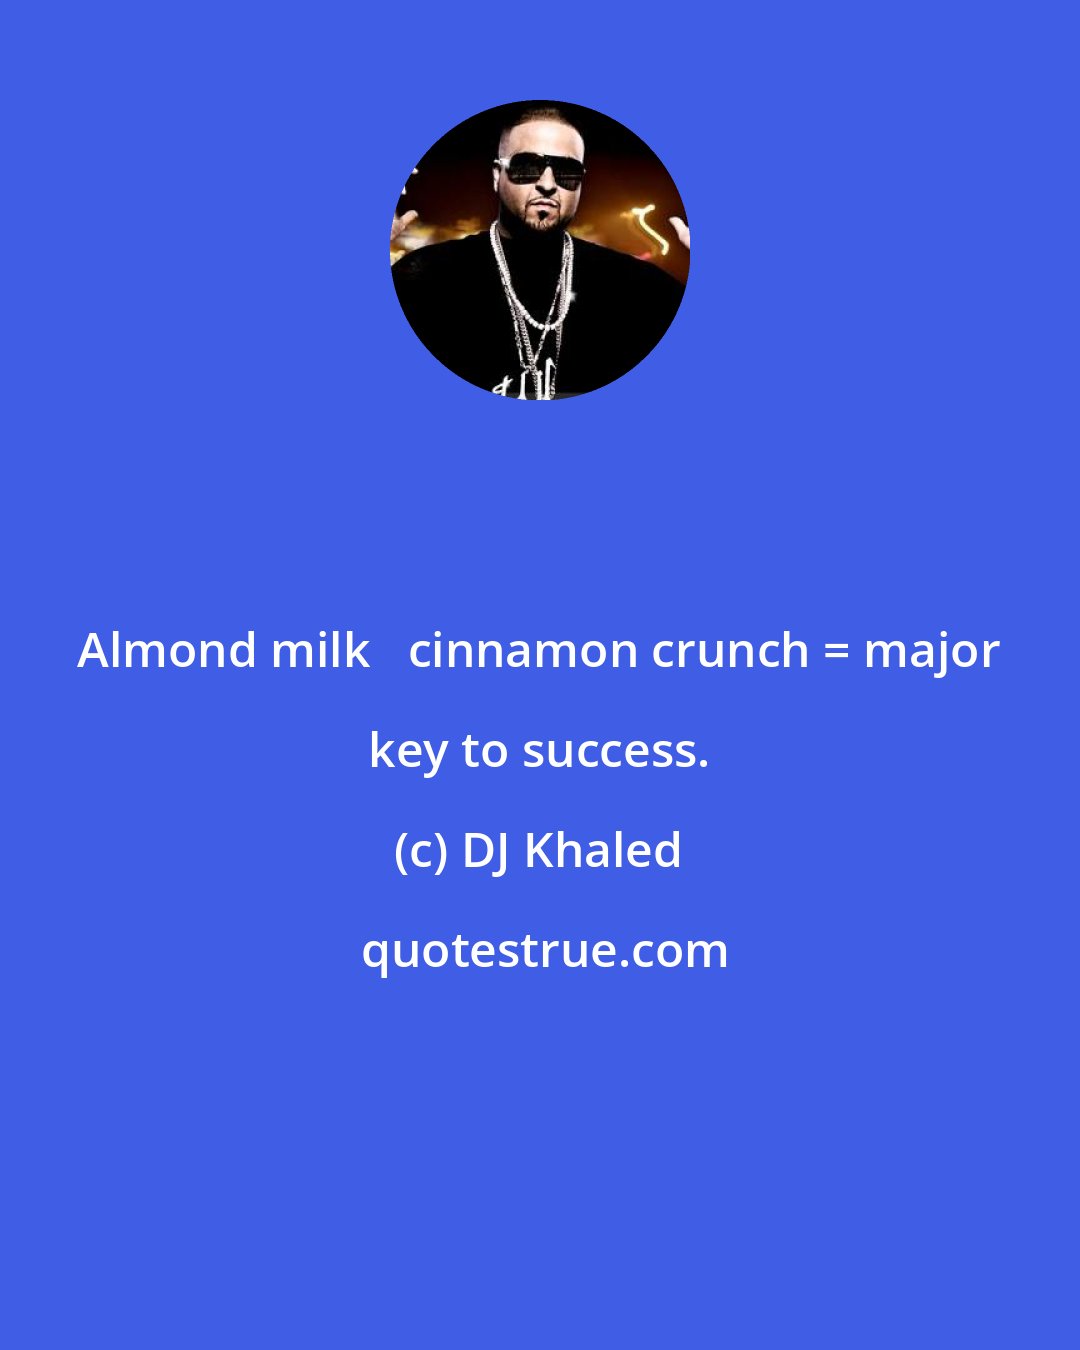 DJ Khaled: Almond milk + cinnamon crunch = major key to success.